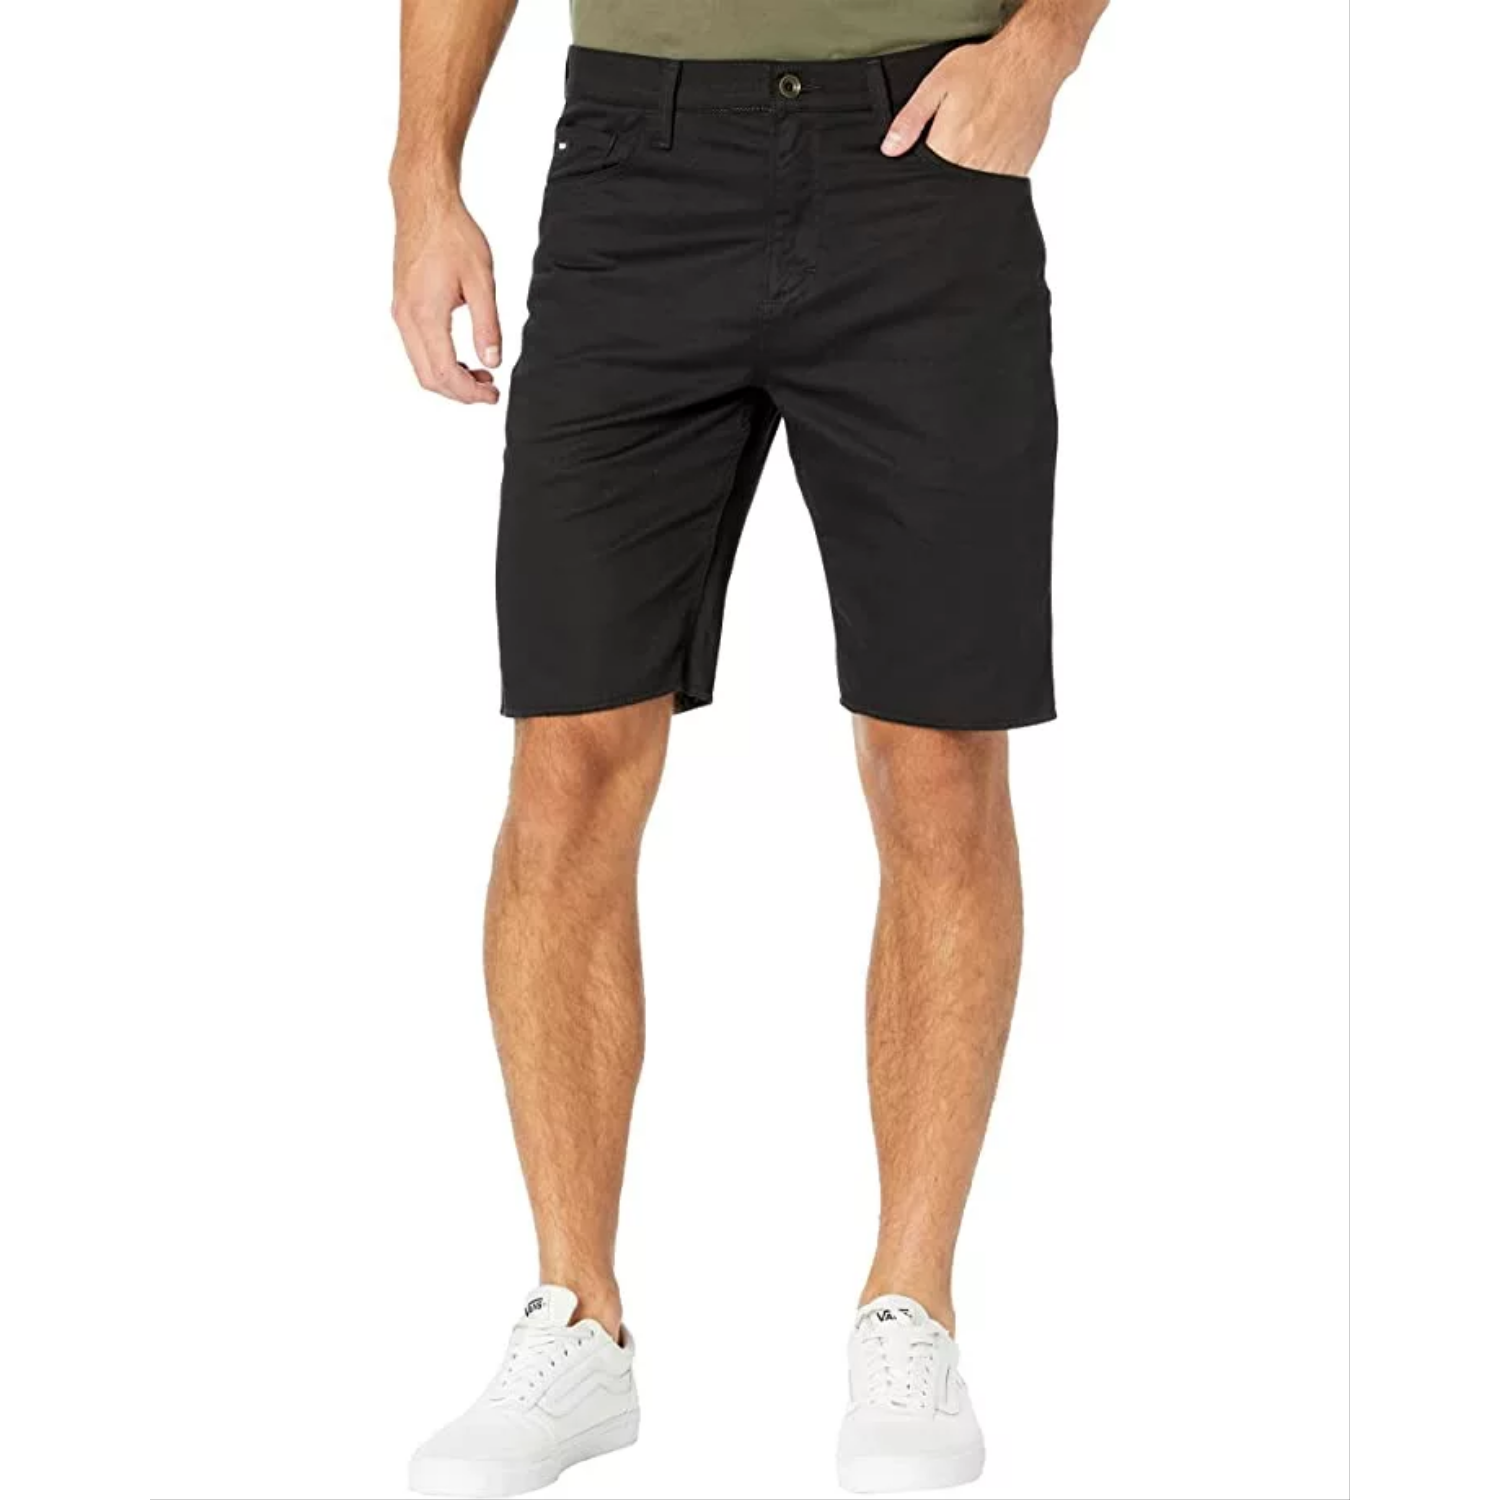 Shop Men's Shorts - Stylish & Comfortable - Great Deals!